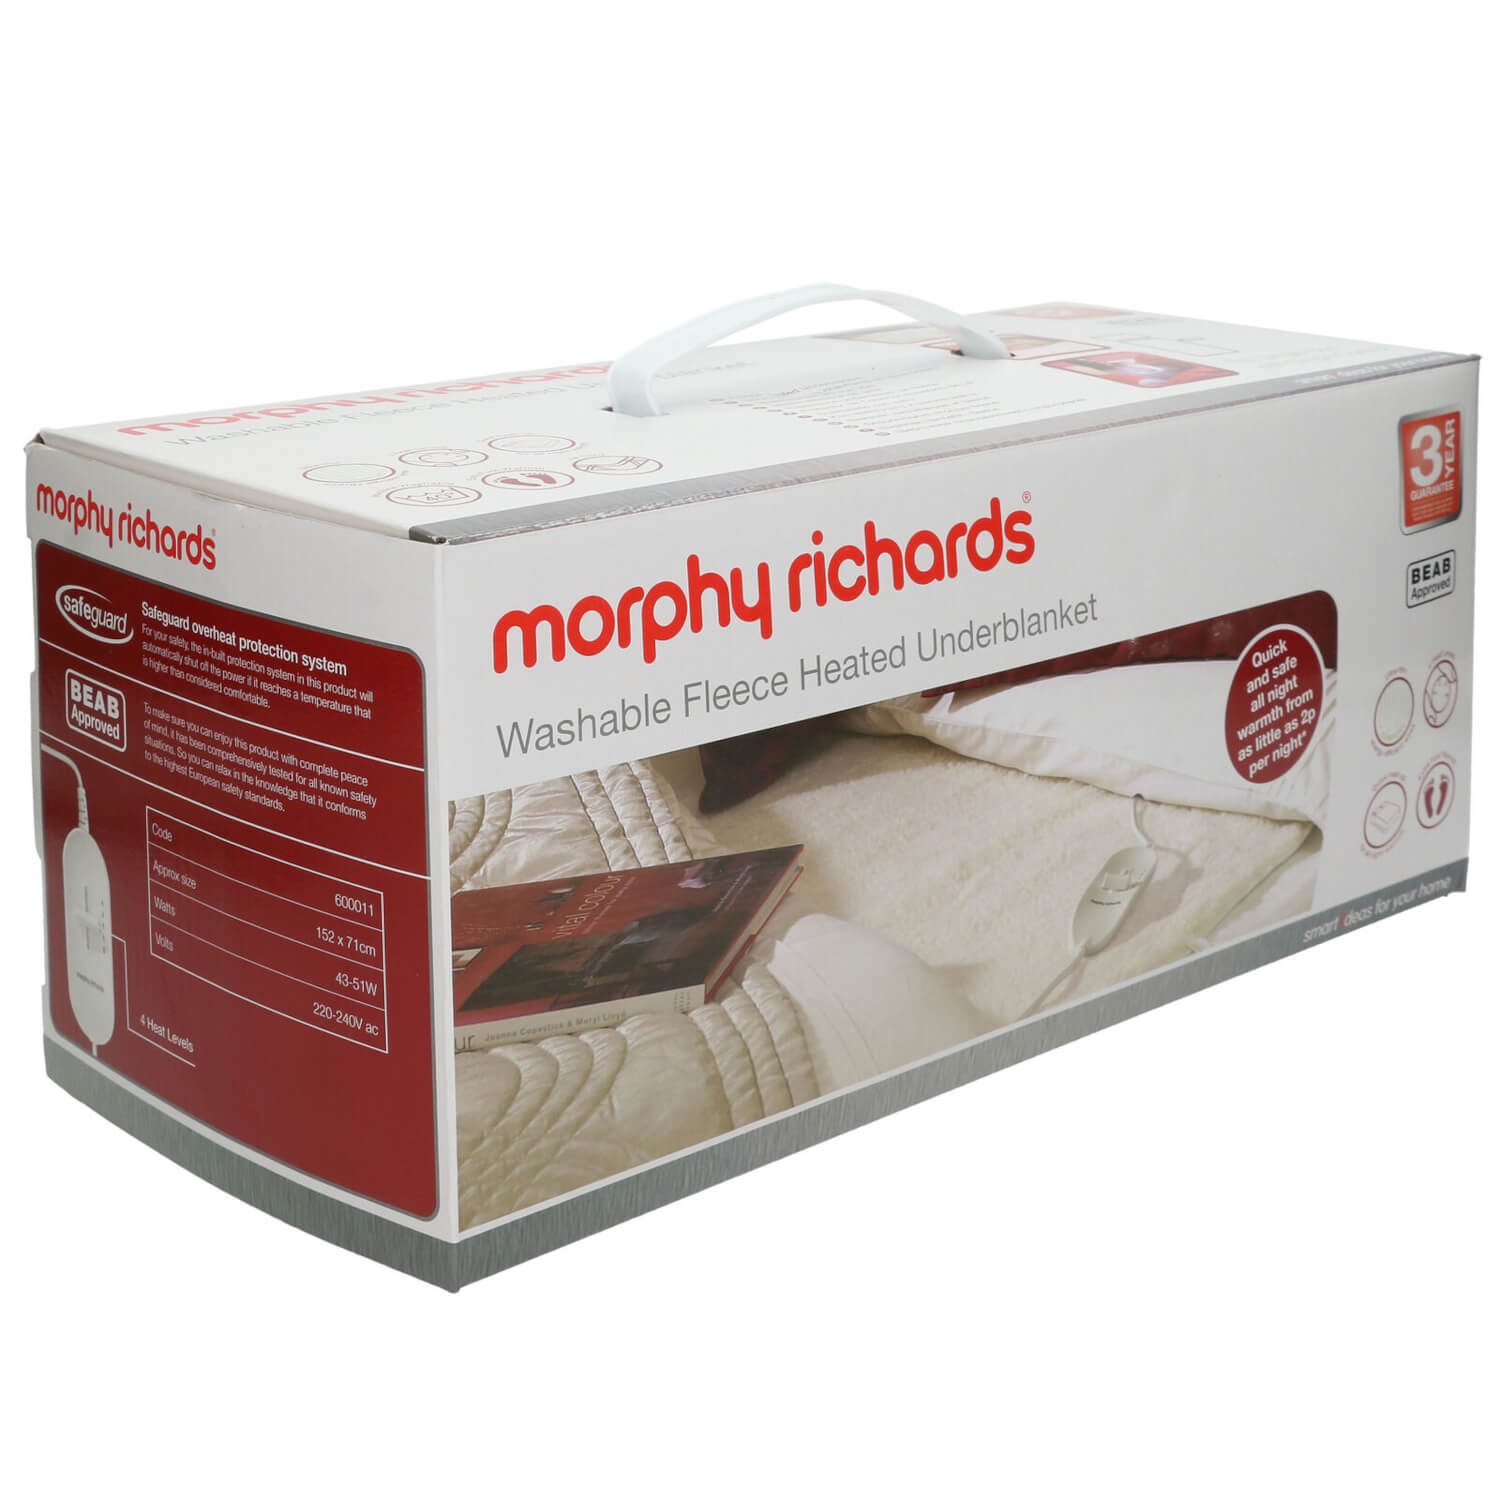 Morphy Richards Washable Fleece Heated Underblanket – Single Size | 600011 1 Shaws Department Stores